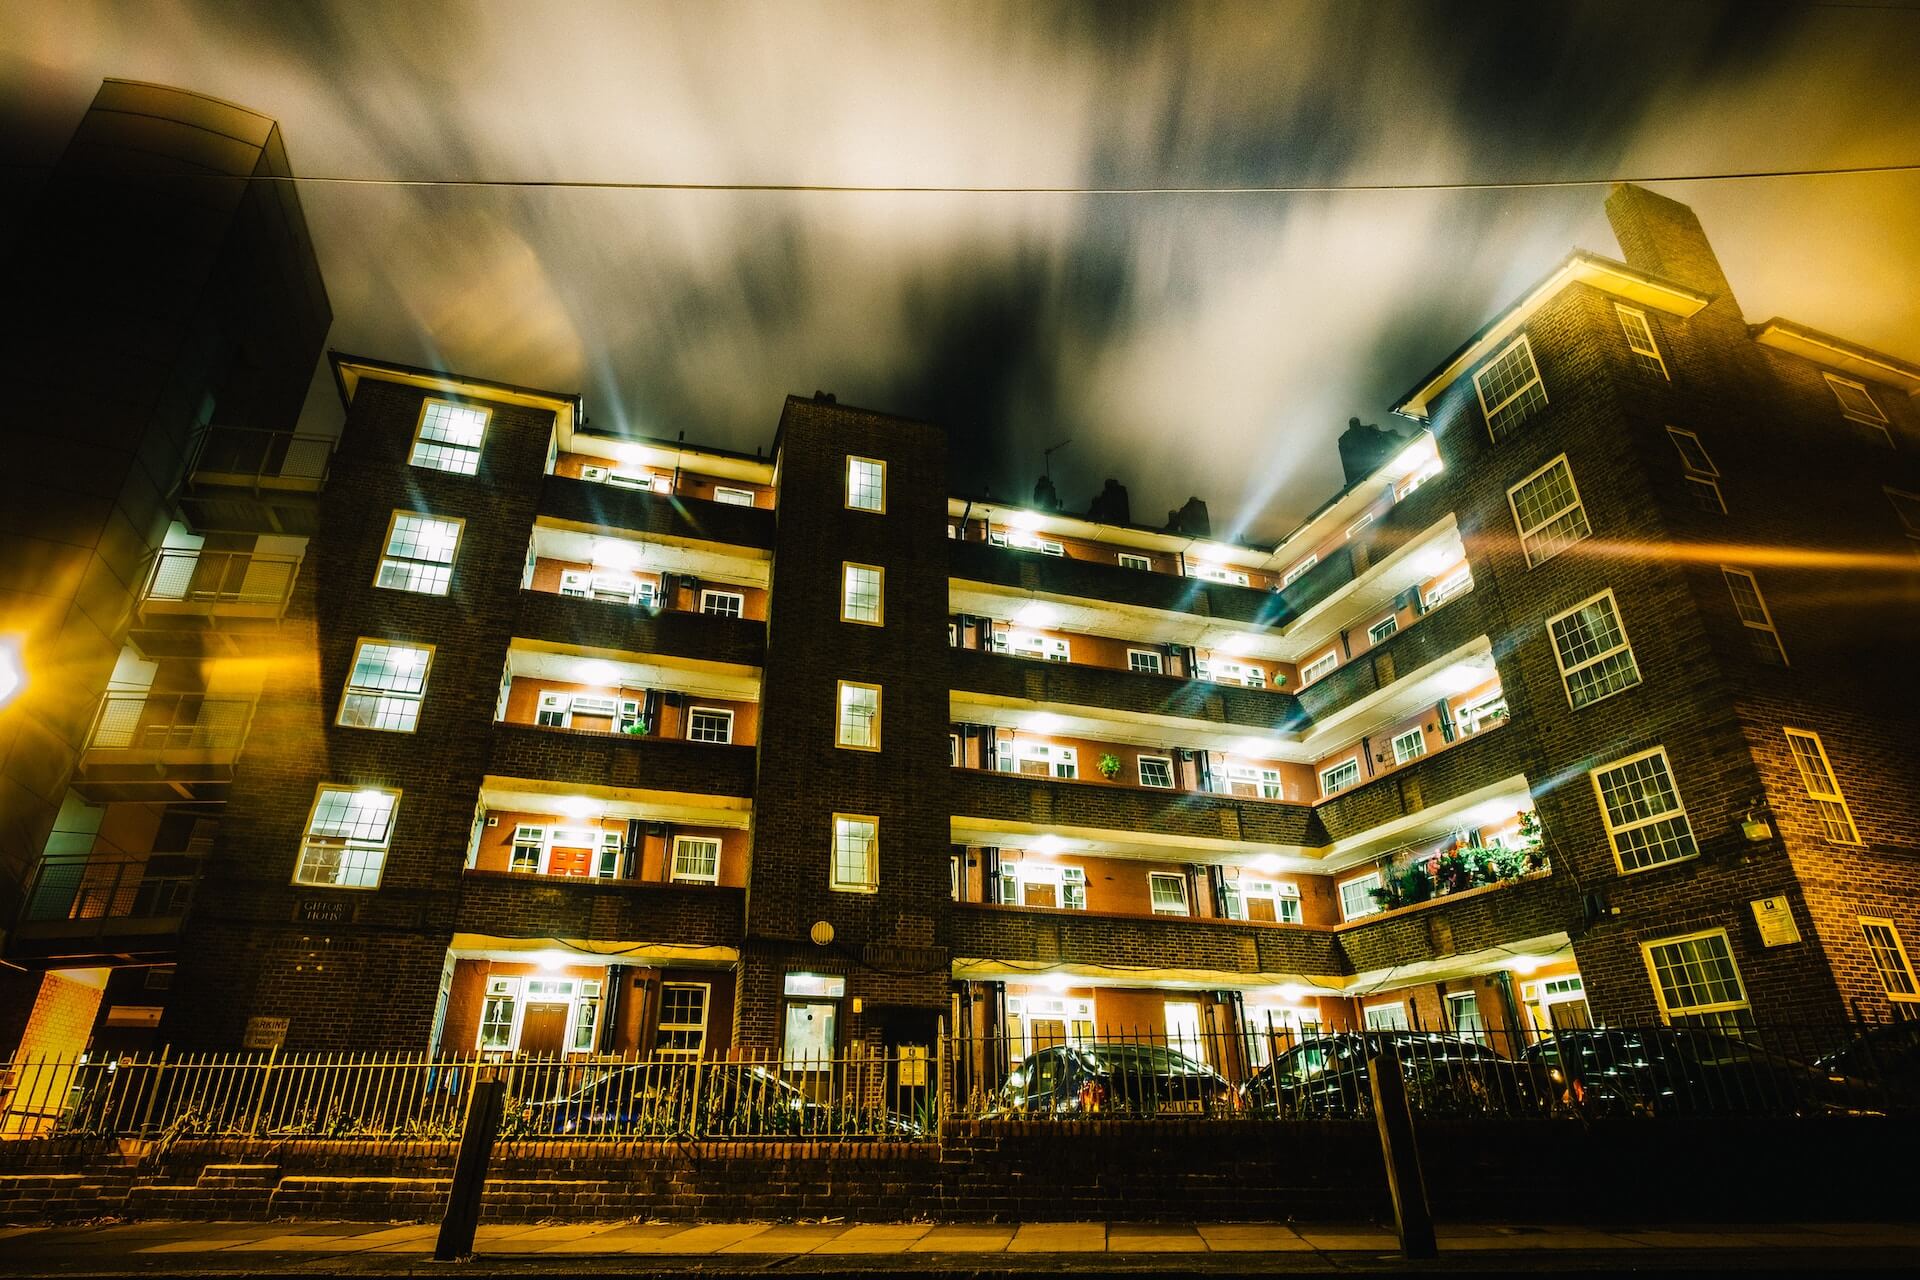 A block of council flats lit up at night